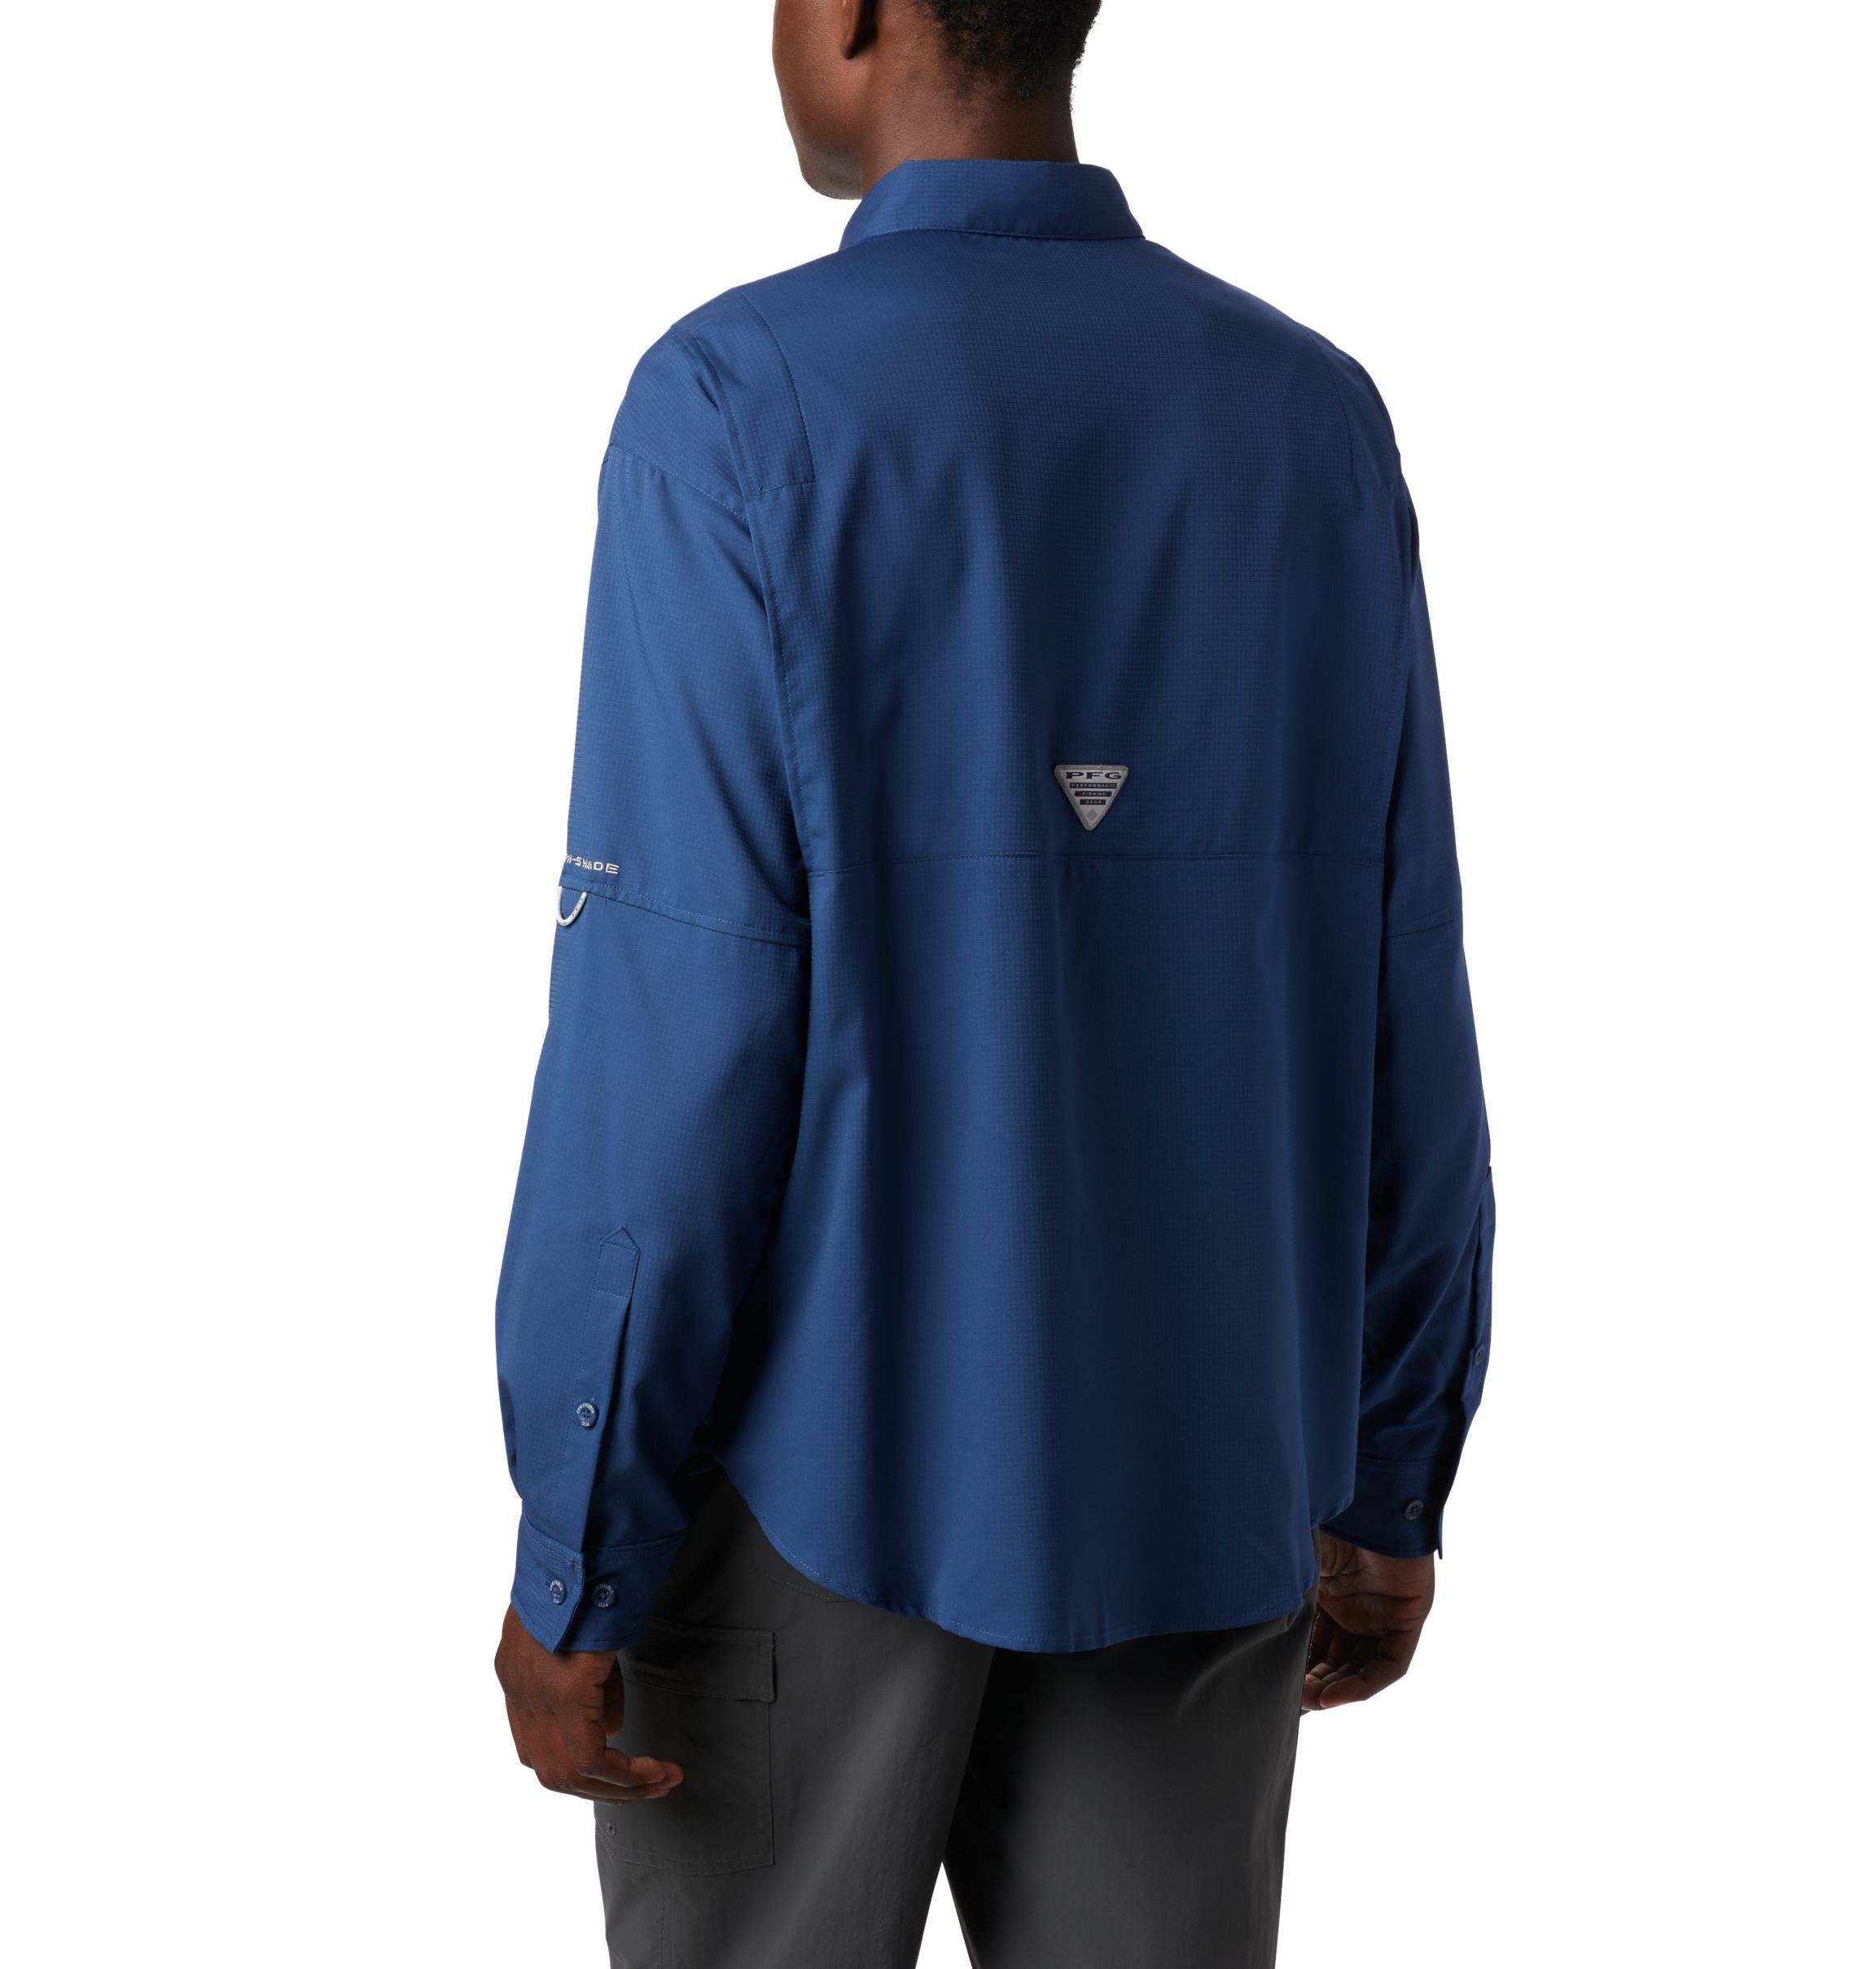 Men's PFG Tamiami™ II Long Sleeve Shirt - Tall